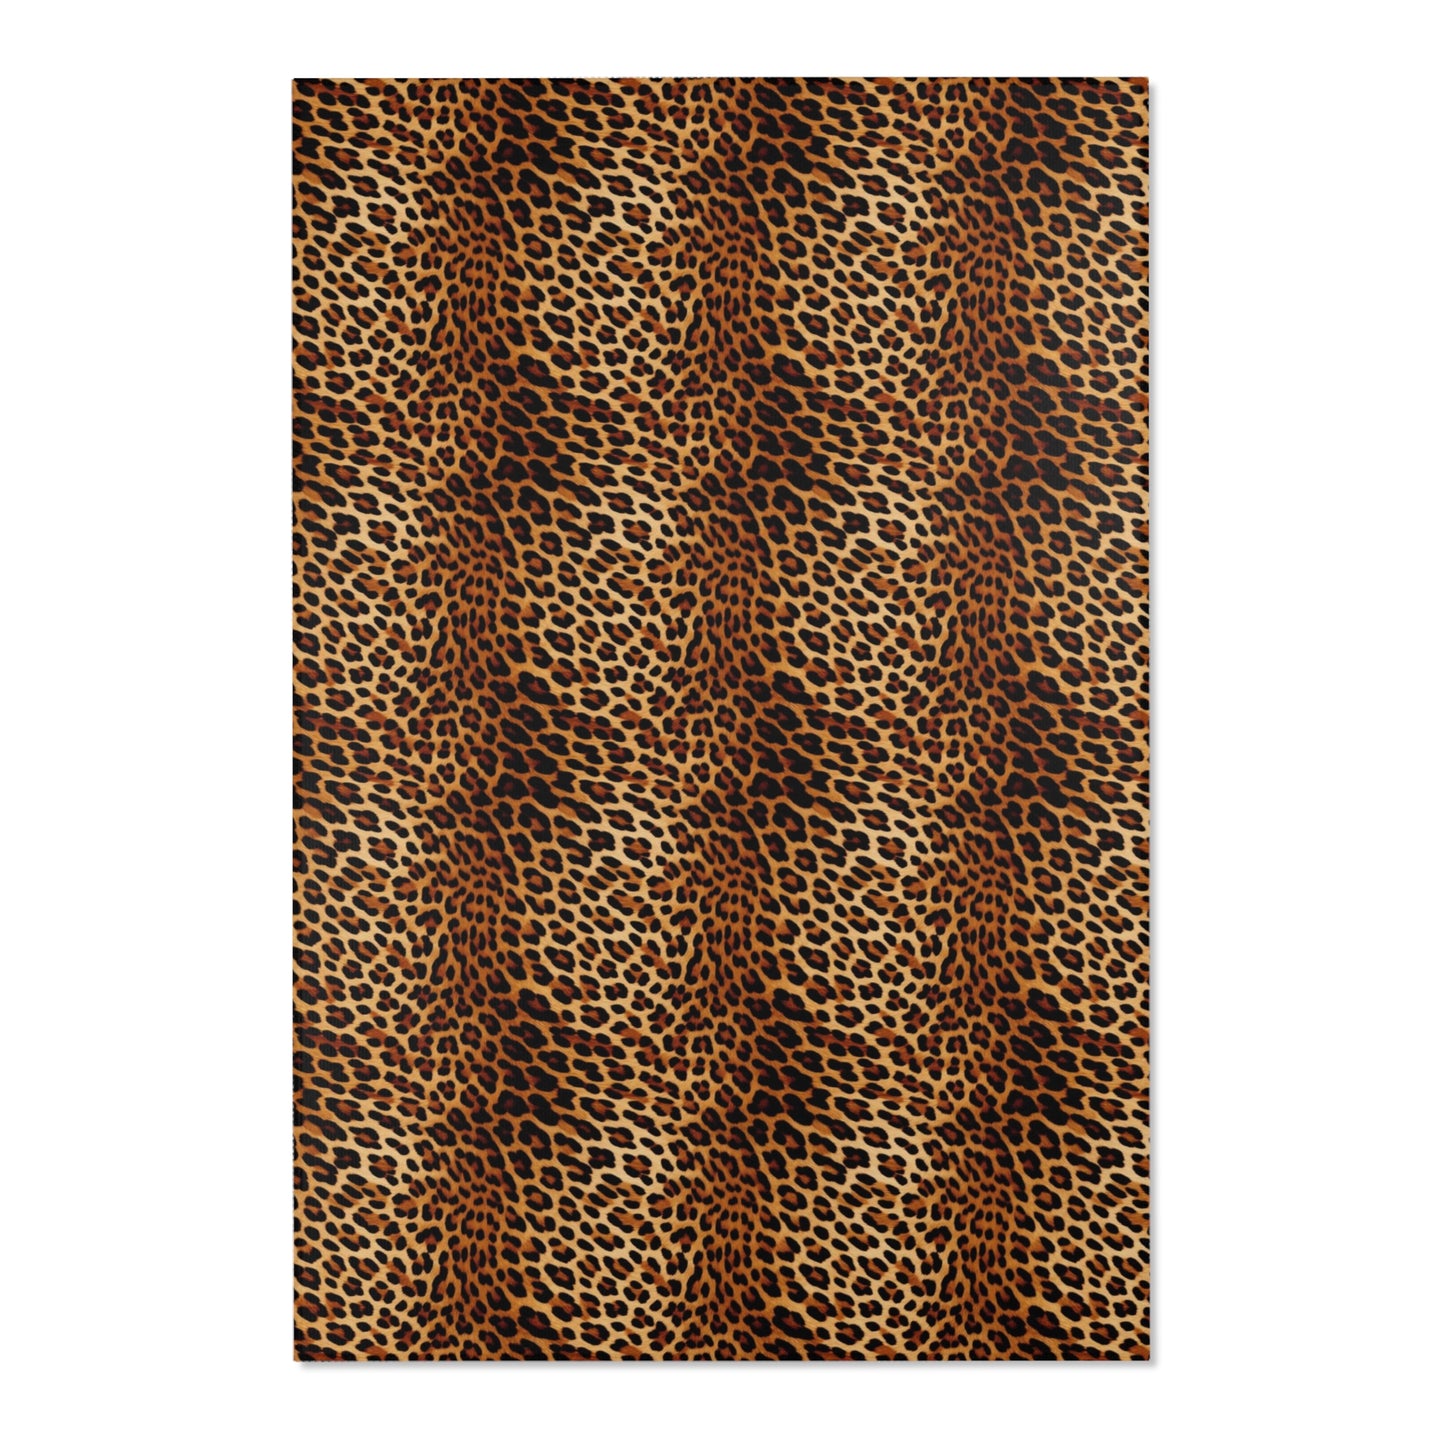 Leopard Print Area Rug Carpet, Cheetah Animal Home Floor Decor Chic 2x3 4x6 3x5 Designer Kids Room Accent Decorative Bedroom Mat Starcove Fashion